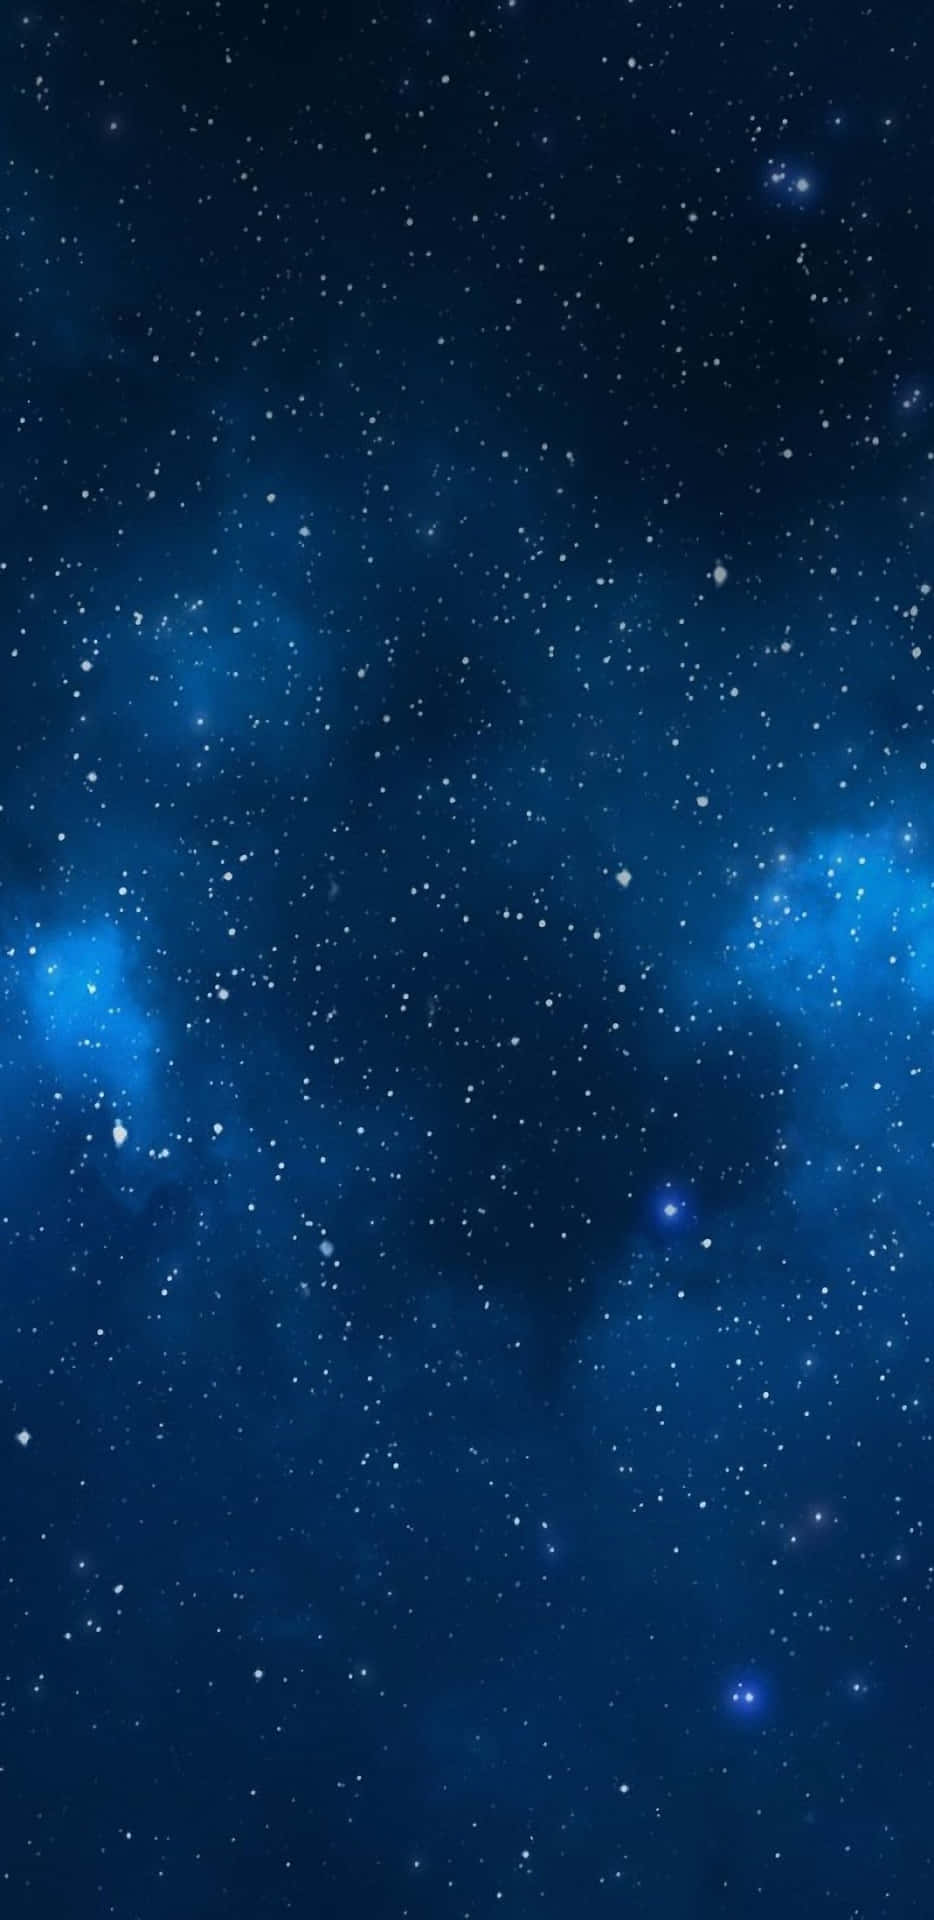 Royal Blue Starry Night Sky Wallpaper